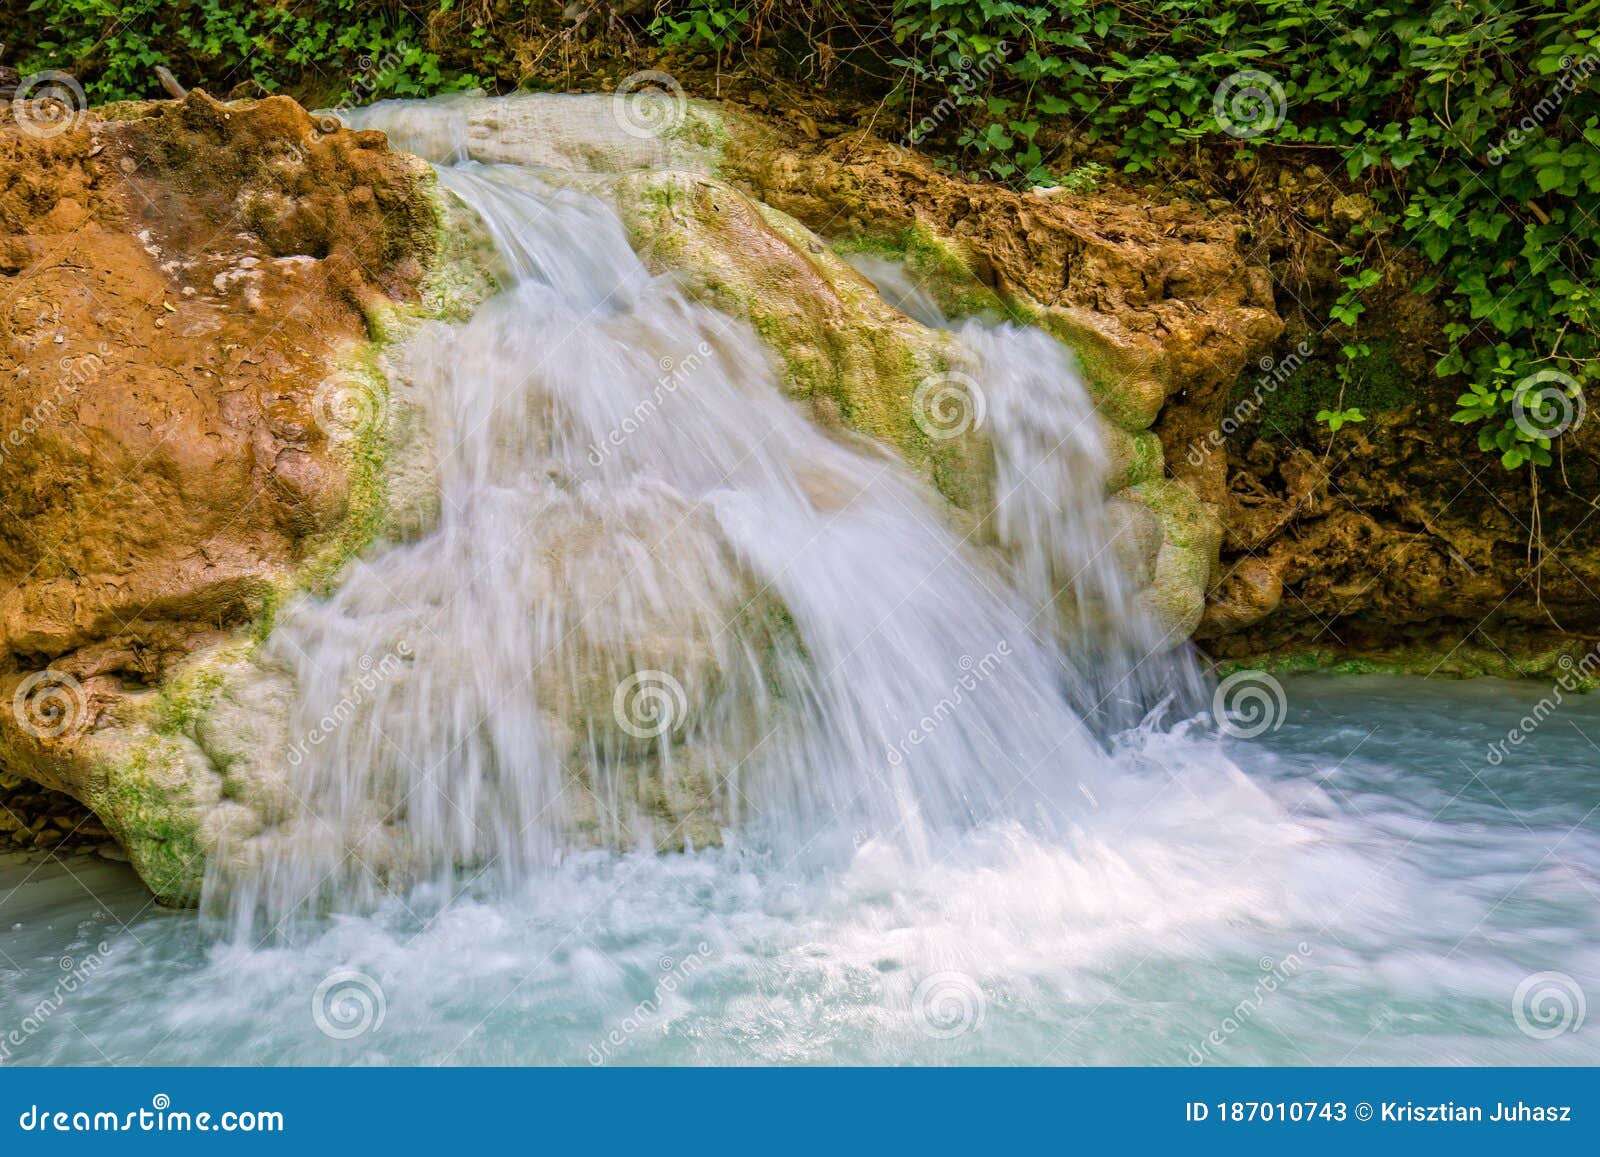 natural hot springs in bagni san filippo - fosso bianco